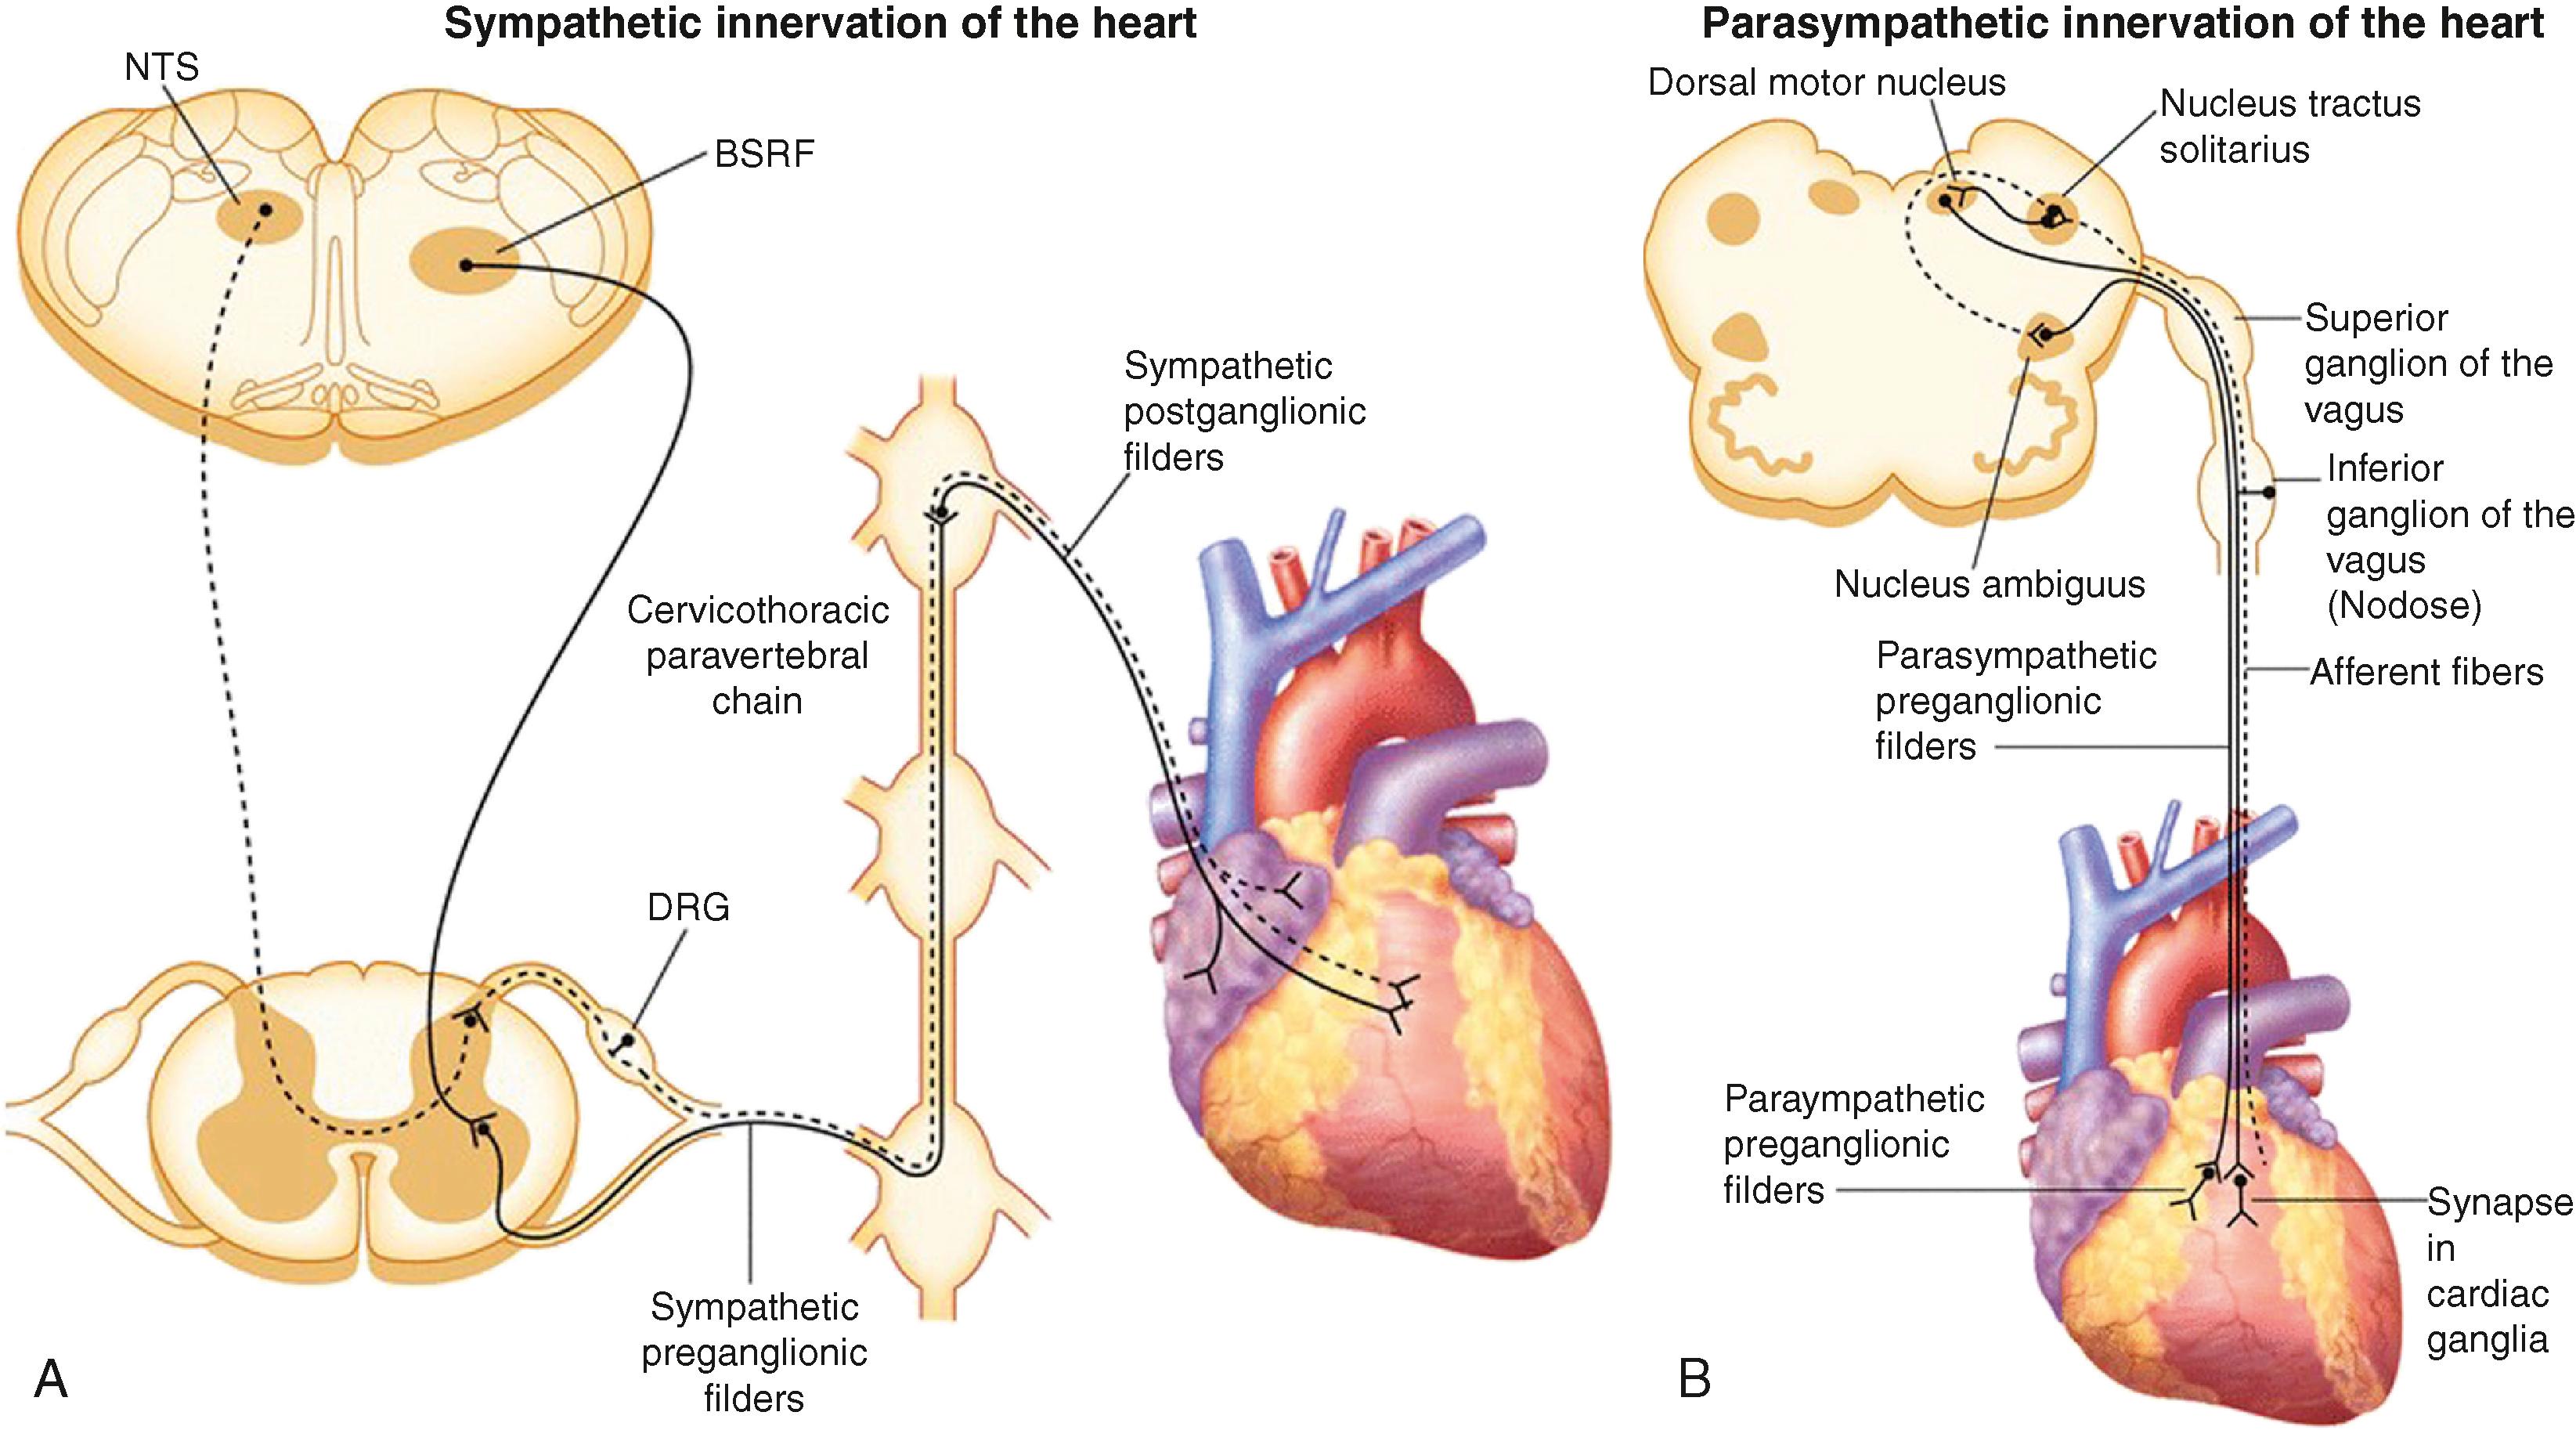 Fig. 137.1, Sympathetic and parasympathetic cardiac innervation.